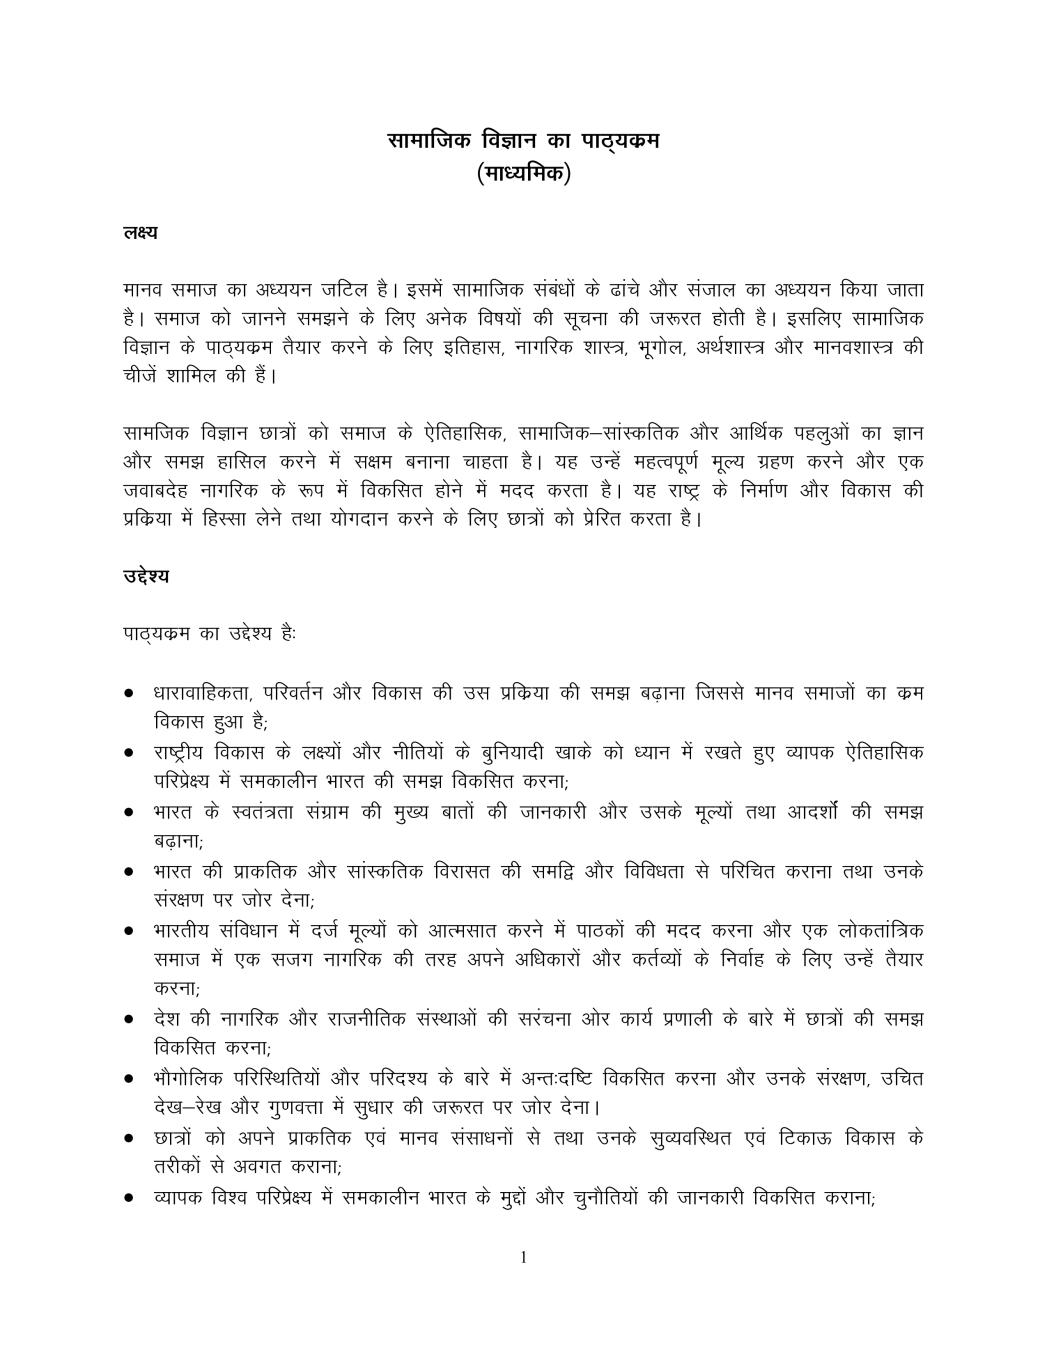 NIOS Class 10 Syllabus - Social Science (Hindi Medium) - Page 1